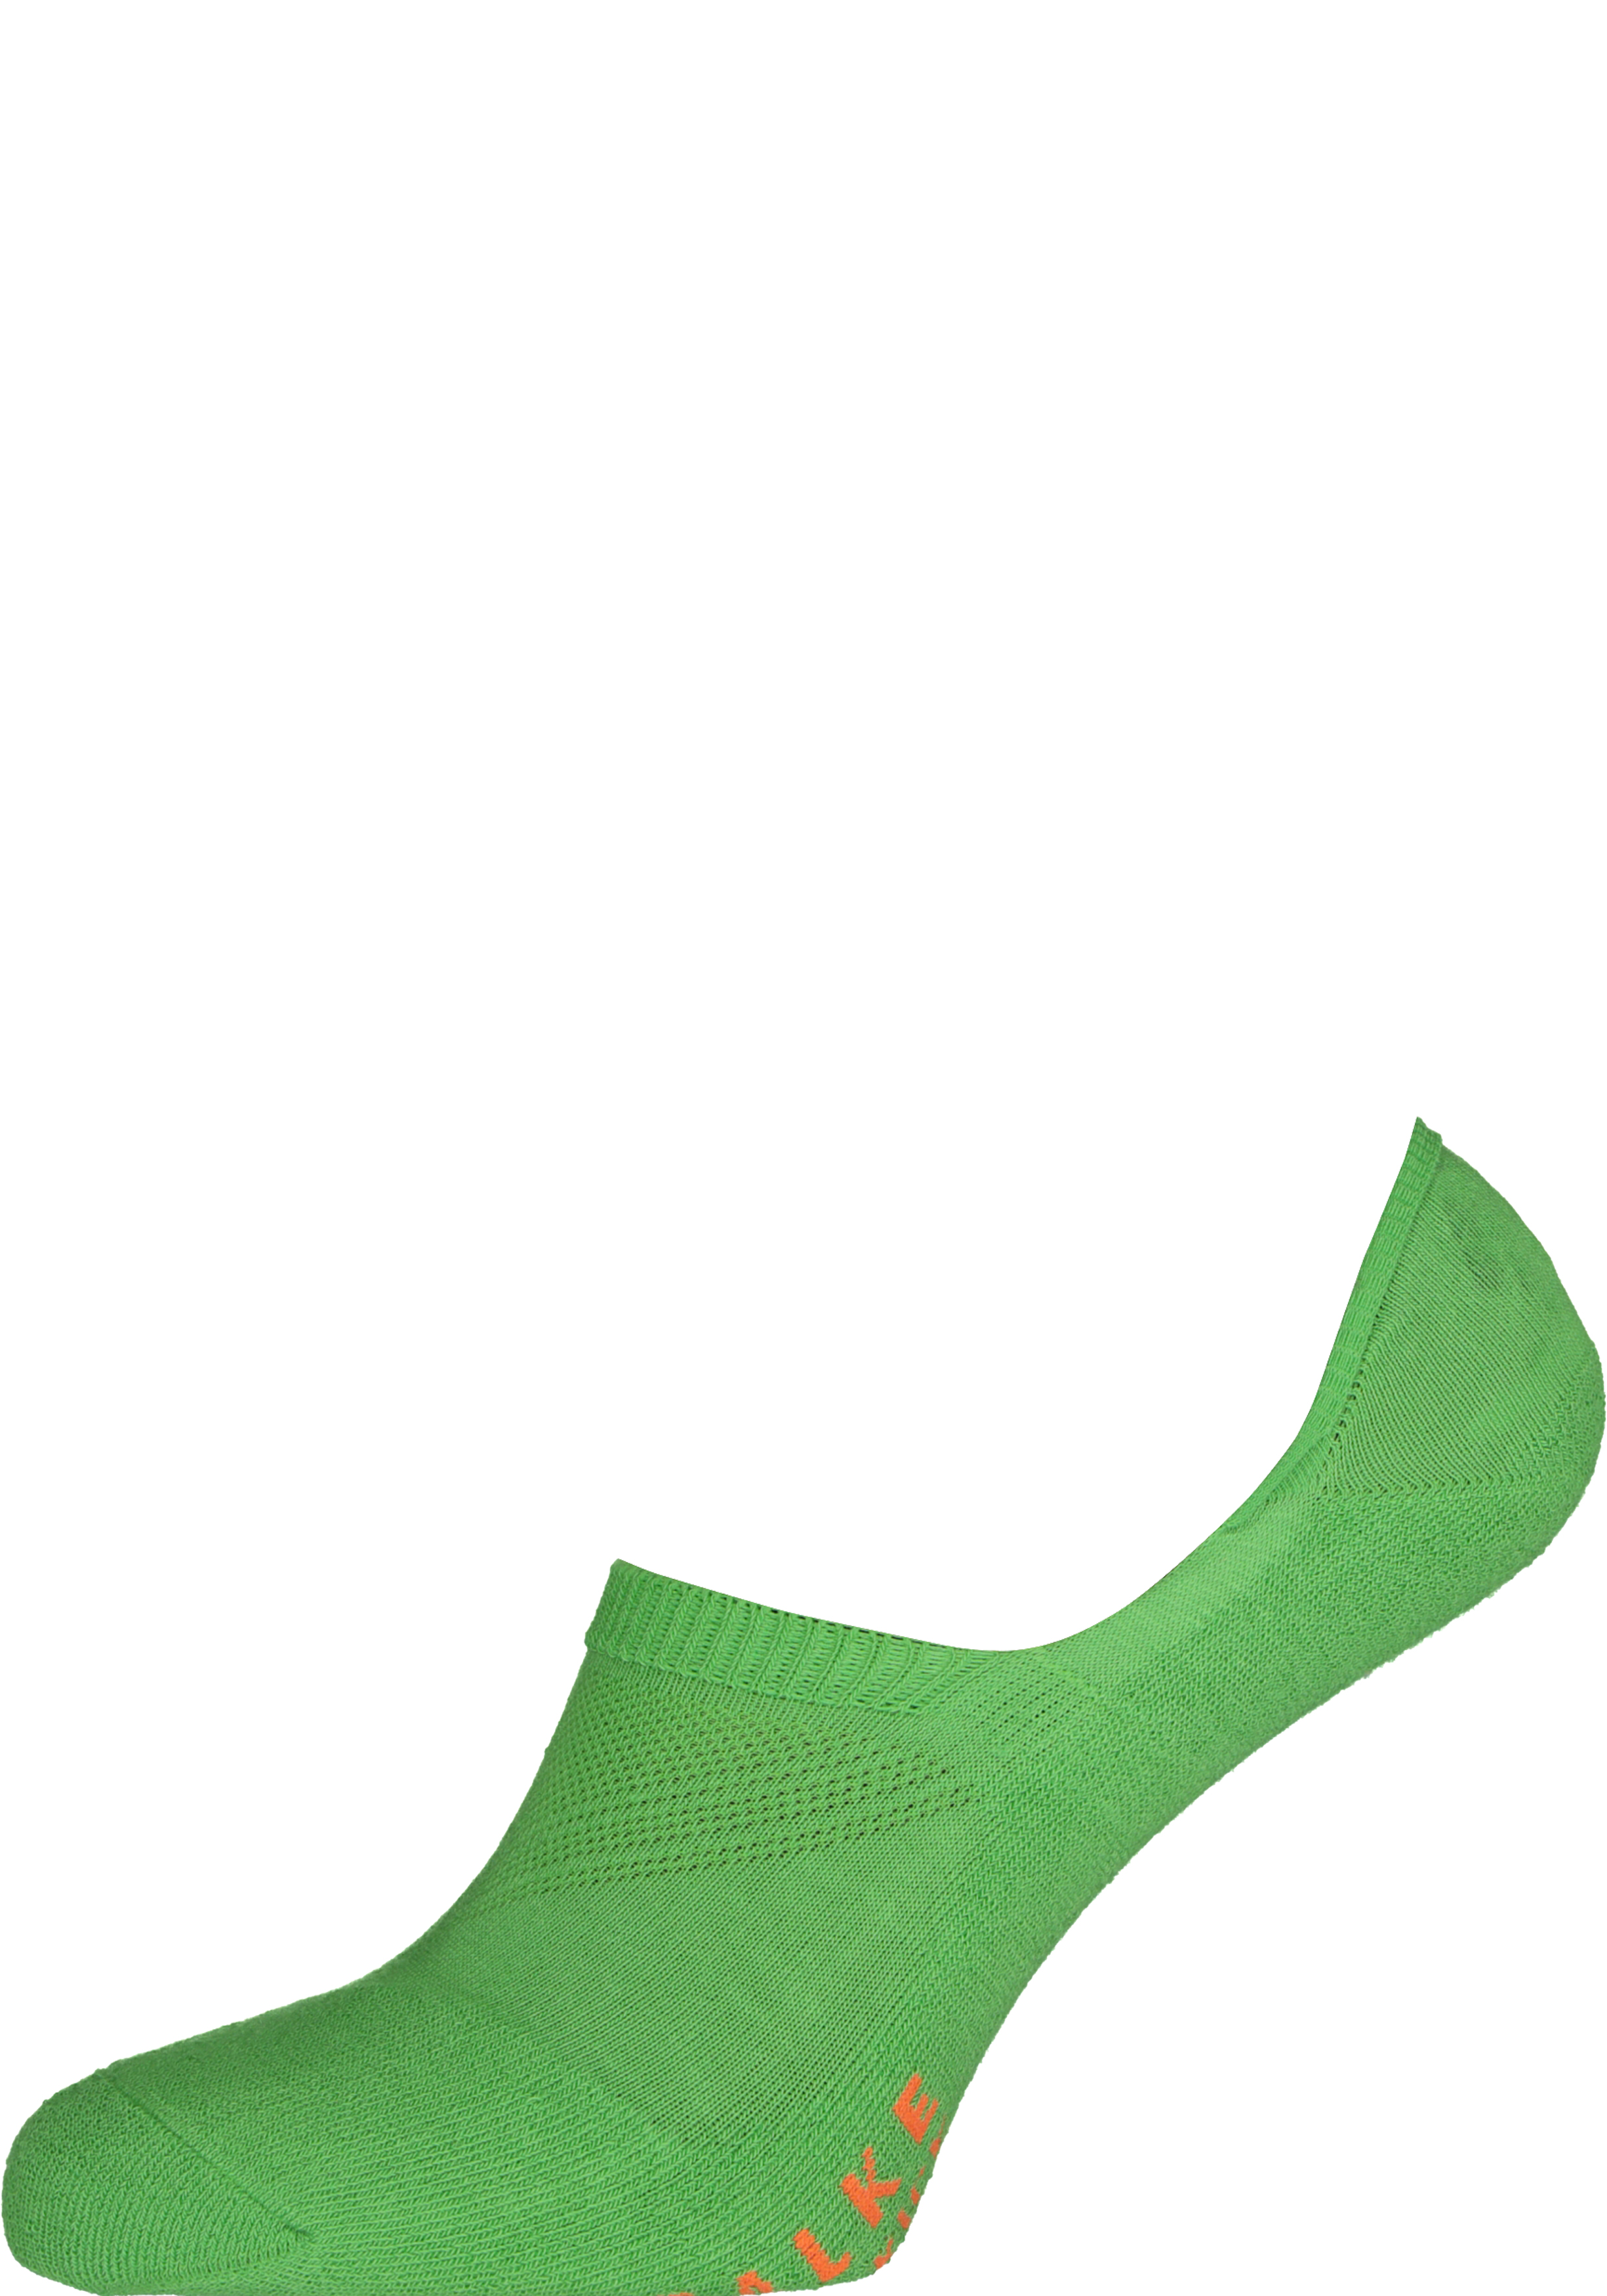 FALKE Cool Kick invisible damessokken, groen (green flash)